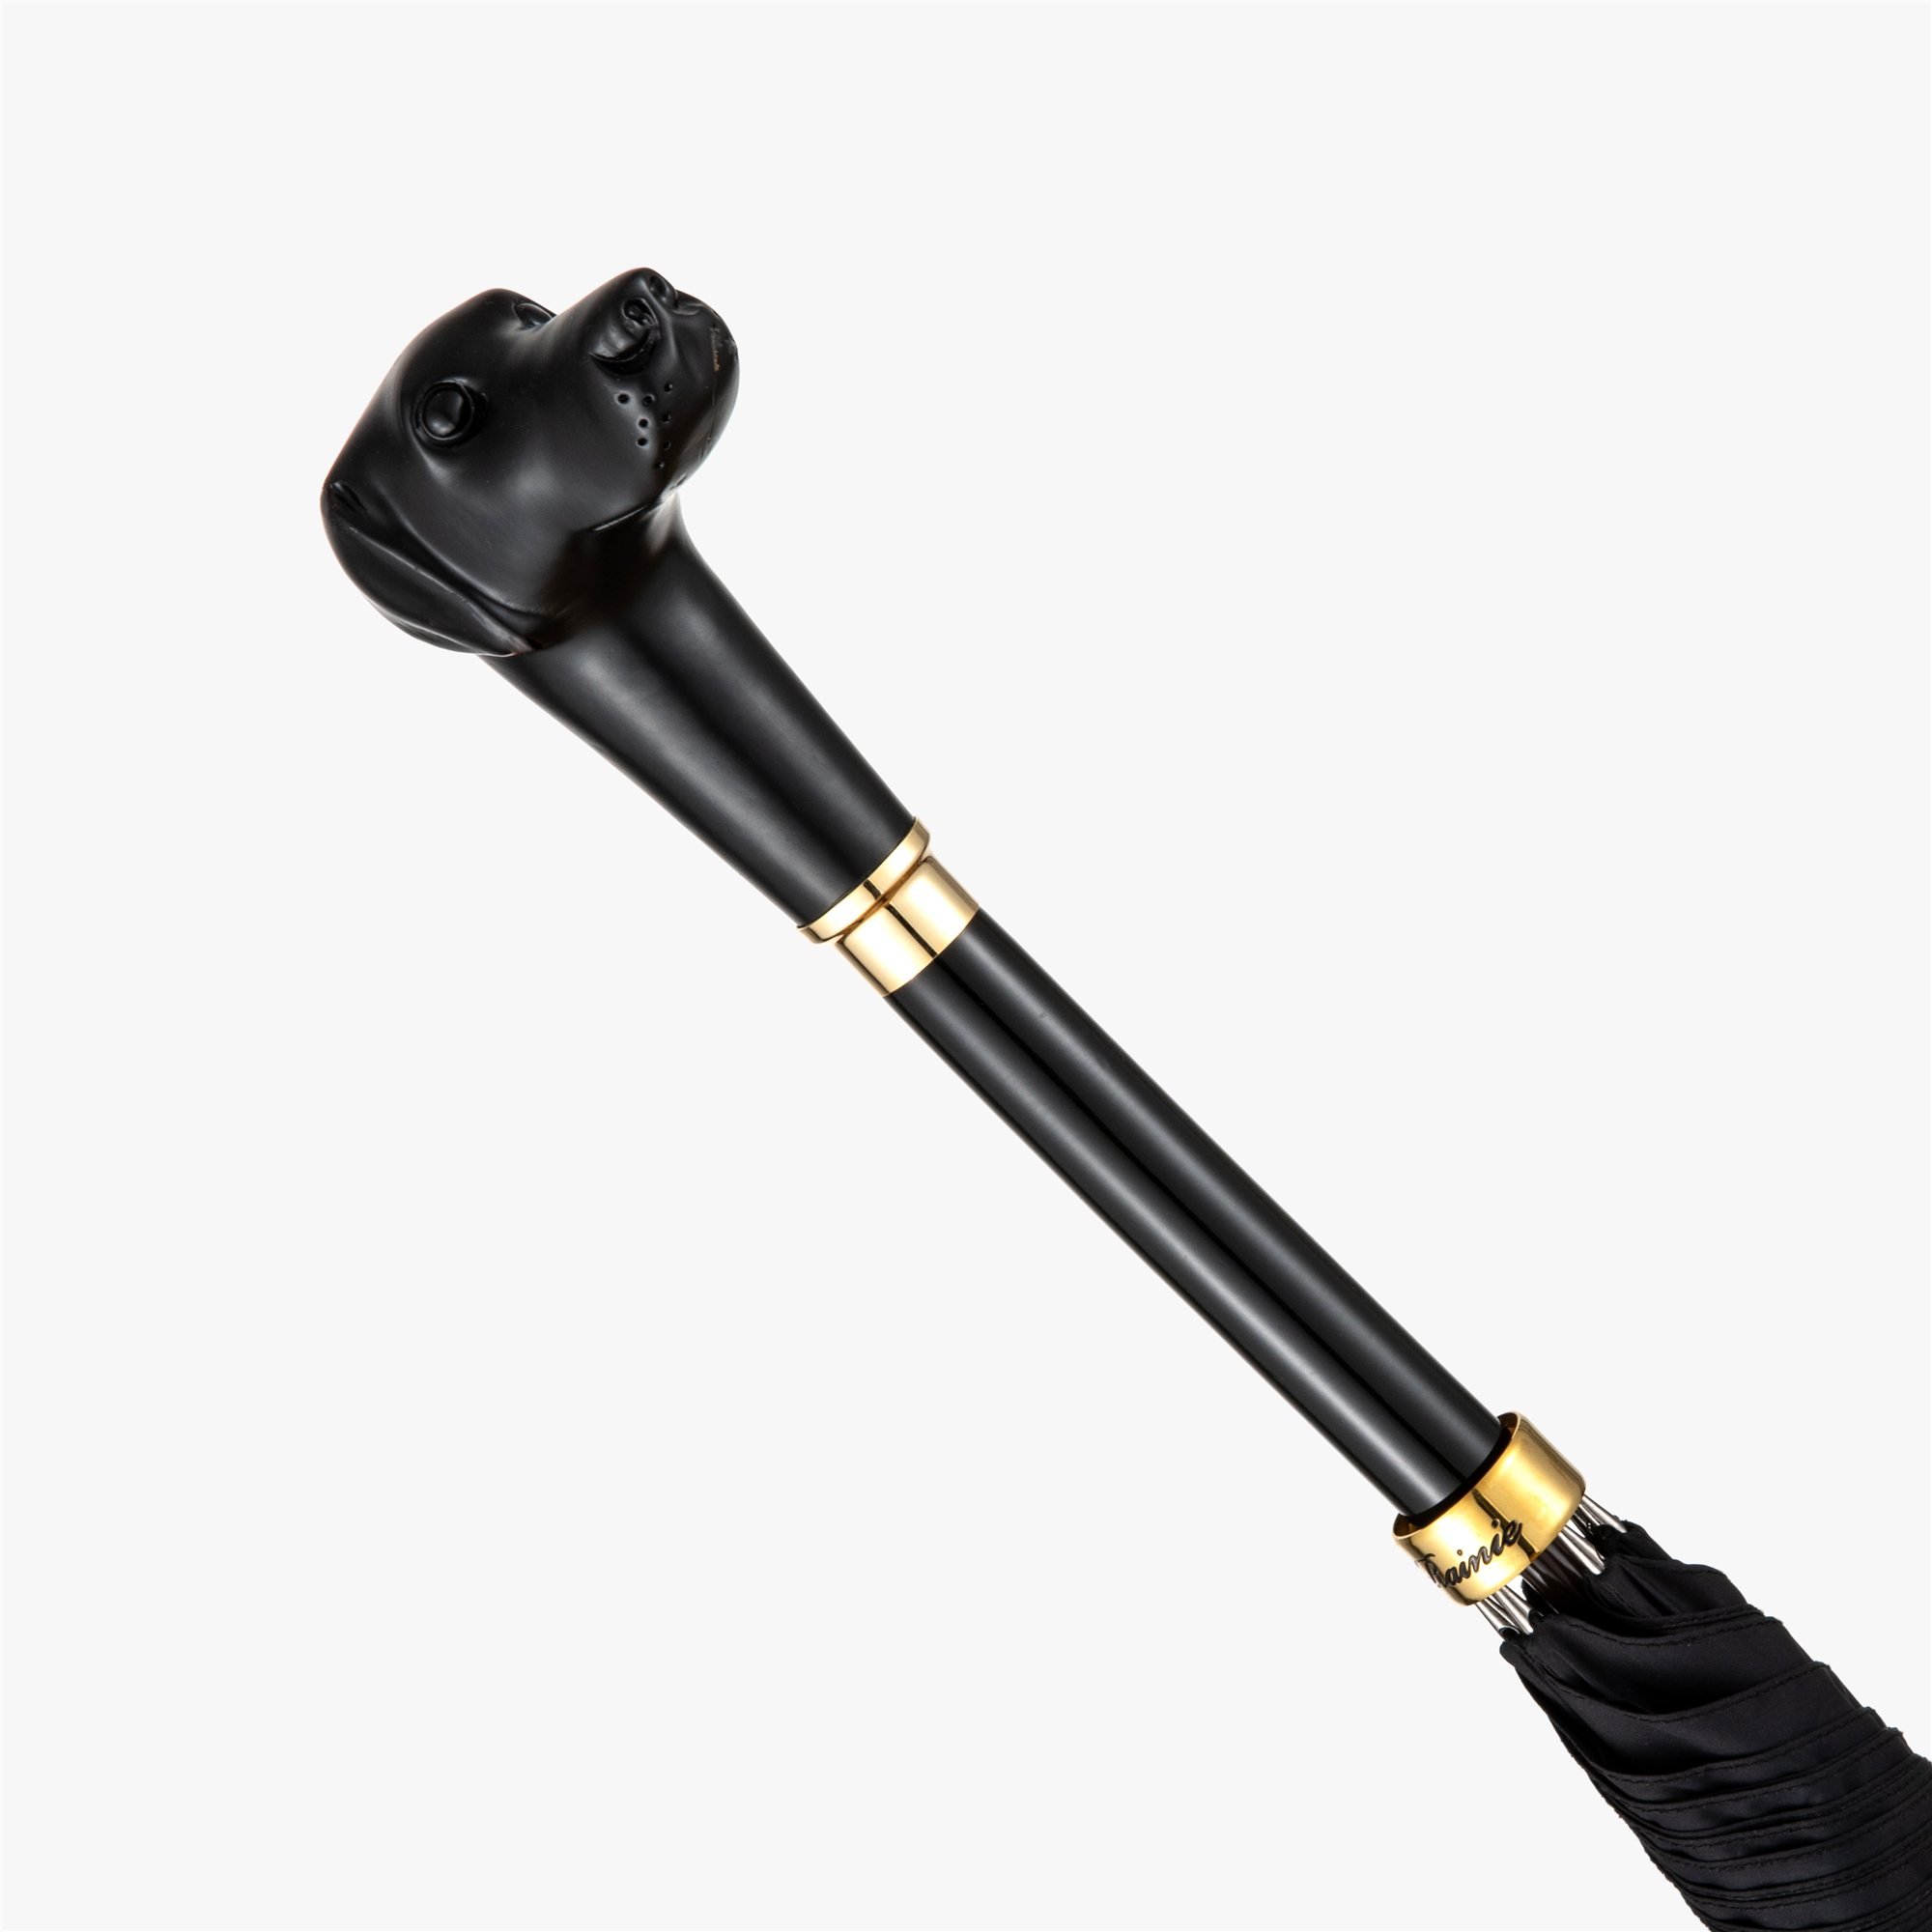 Schnauzer umbrella with straight handle